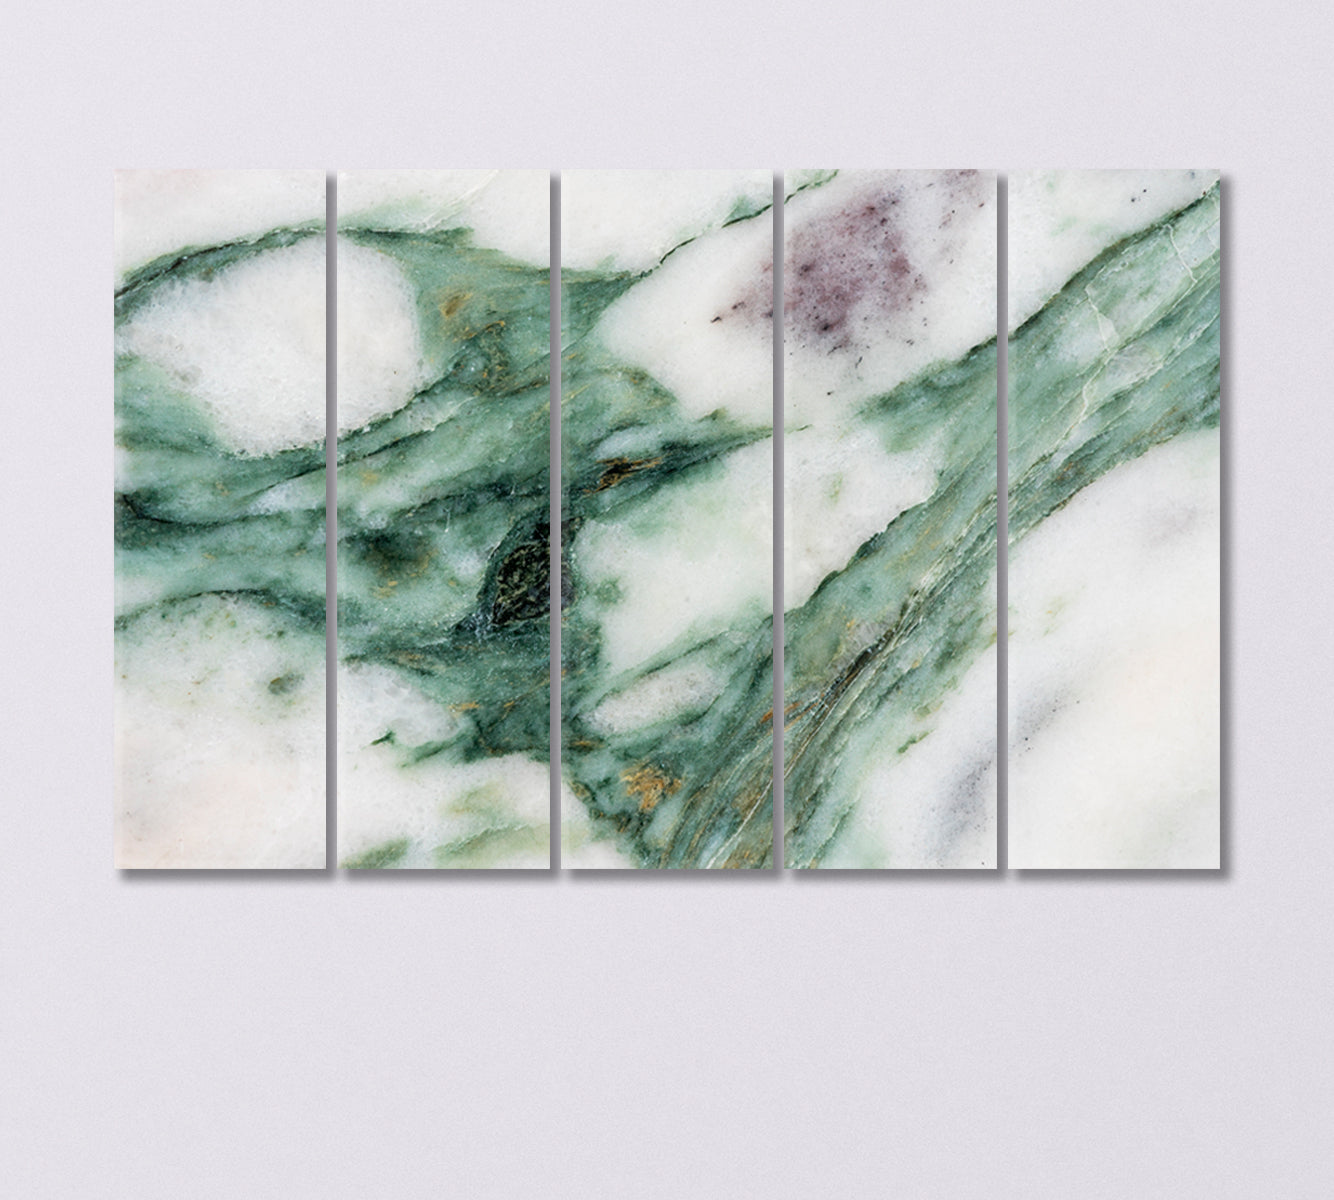 Deep Green Veins on White Marble Canvas Print-Canvas Print-CetArt-5 Panels-36x24 inches-CetArt